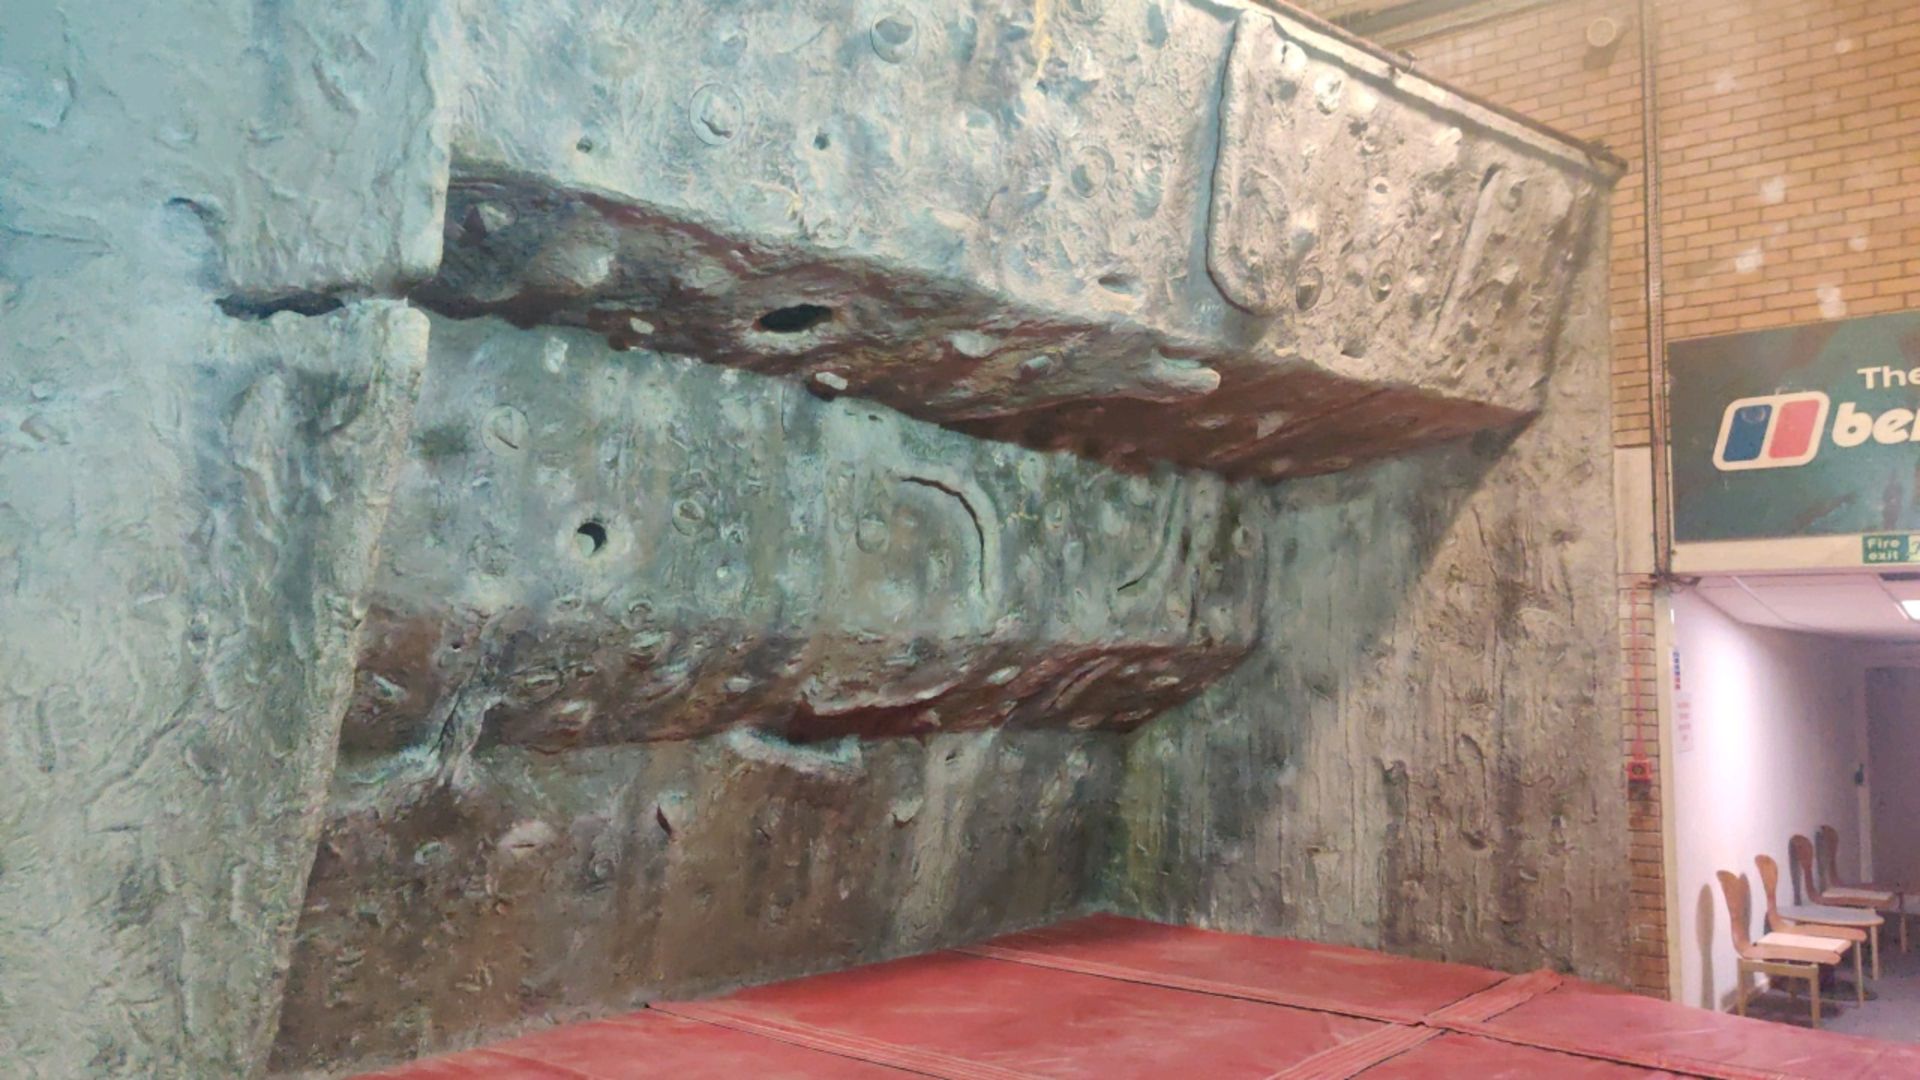 Berghaus climbing wall - Image 21 of 22